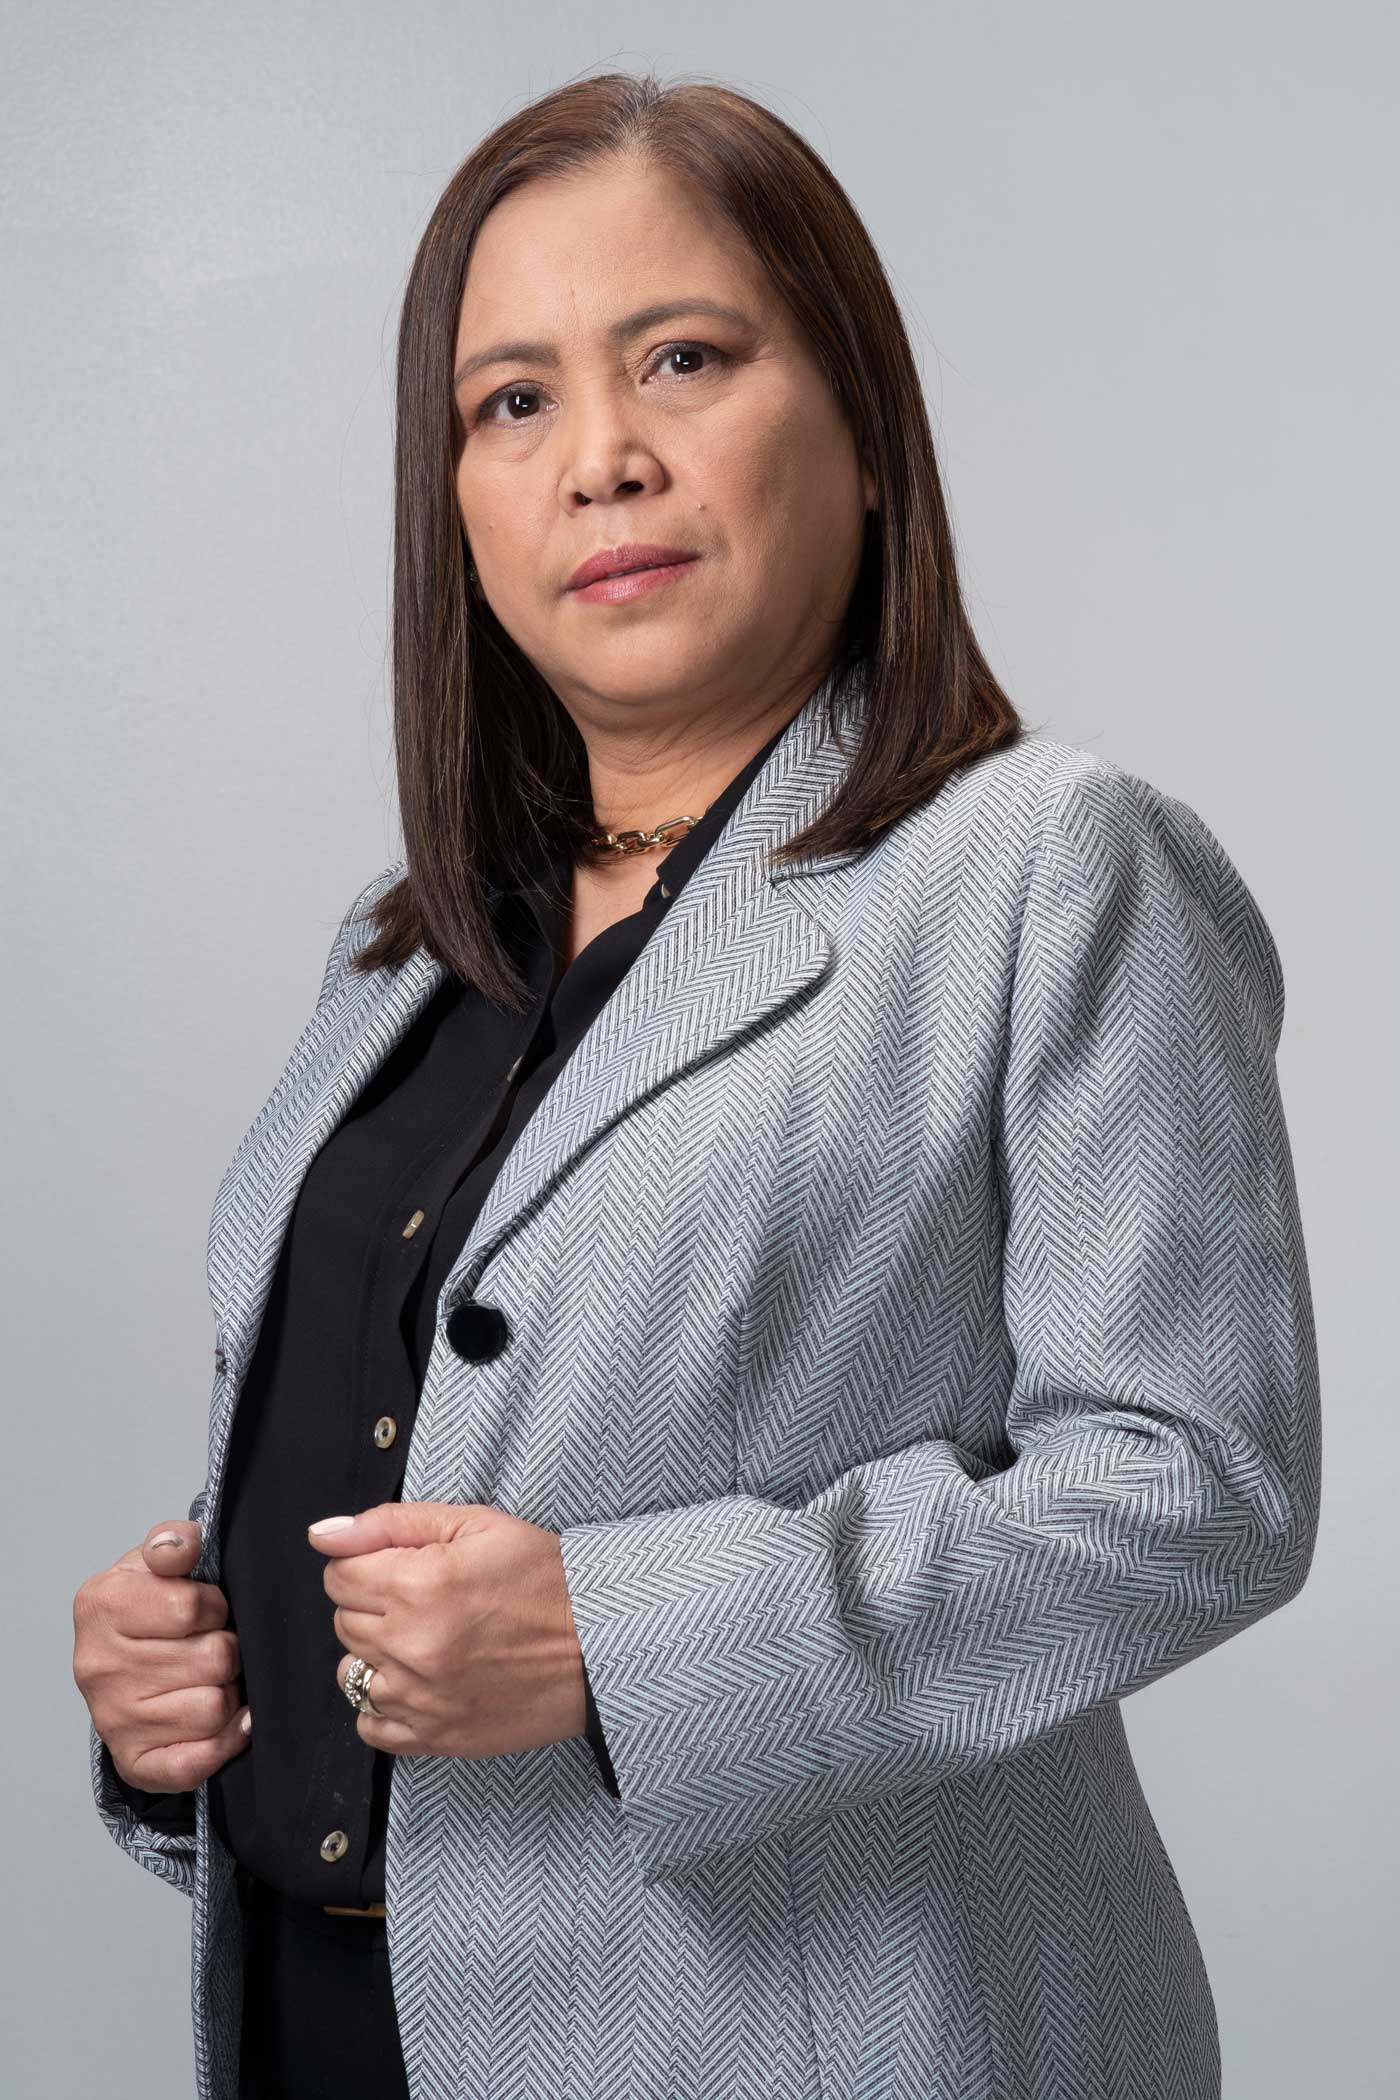 Flordeliza Cruz Zenith Capital CEO